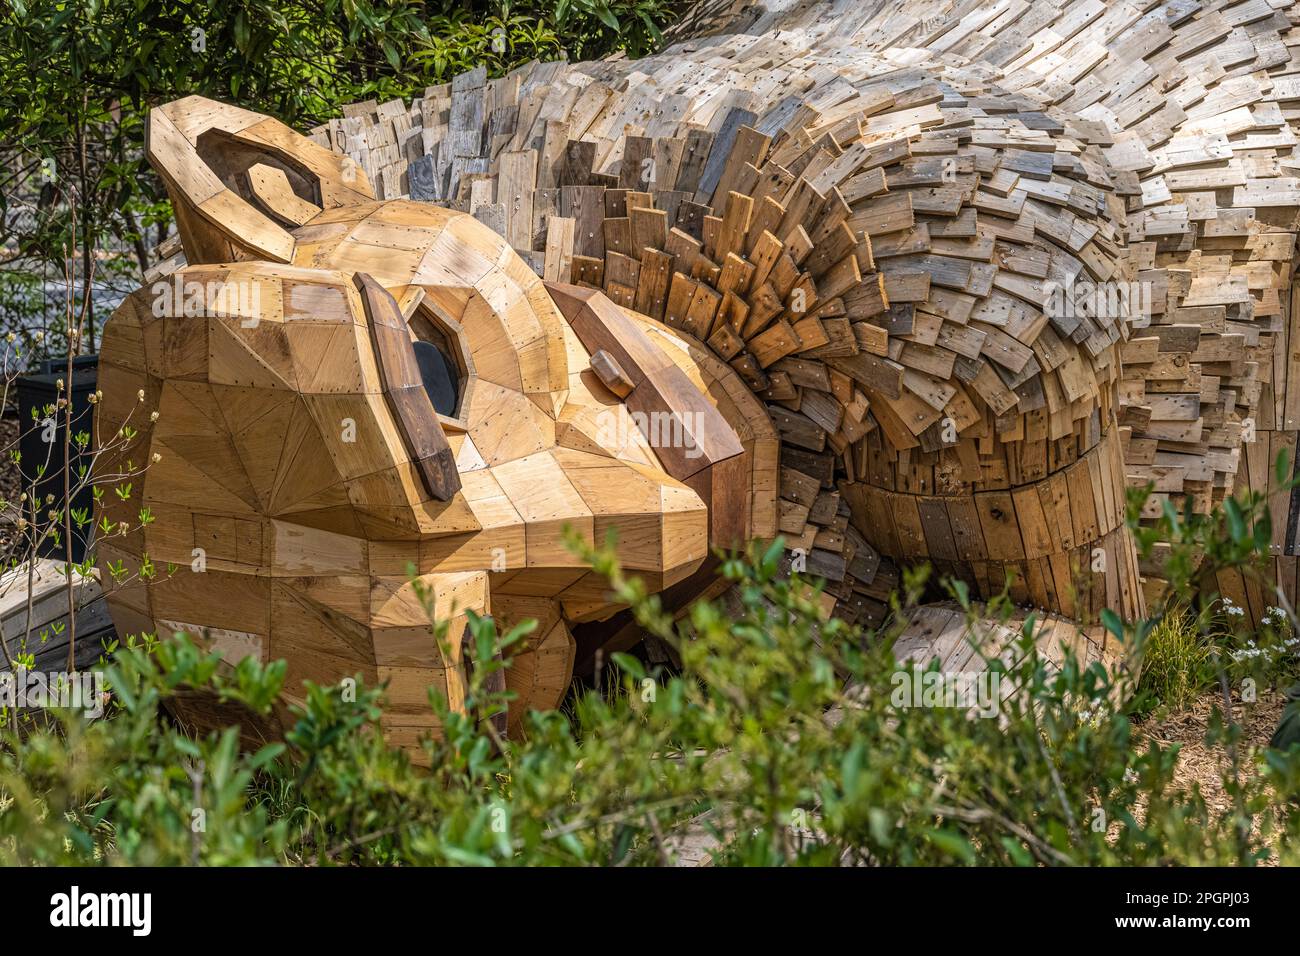 Reclining giant wooden troll sculpture by Danish artist Thomas Dambo at the Atlanta Botanical Garden in Atlanta, Georgia. (USA) Stock Photo